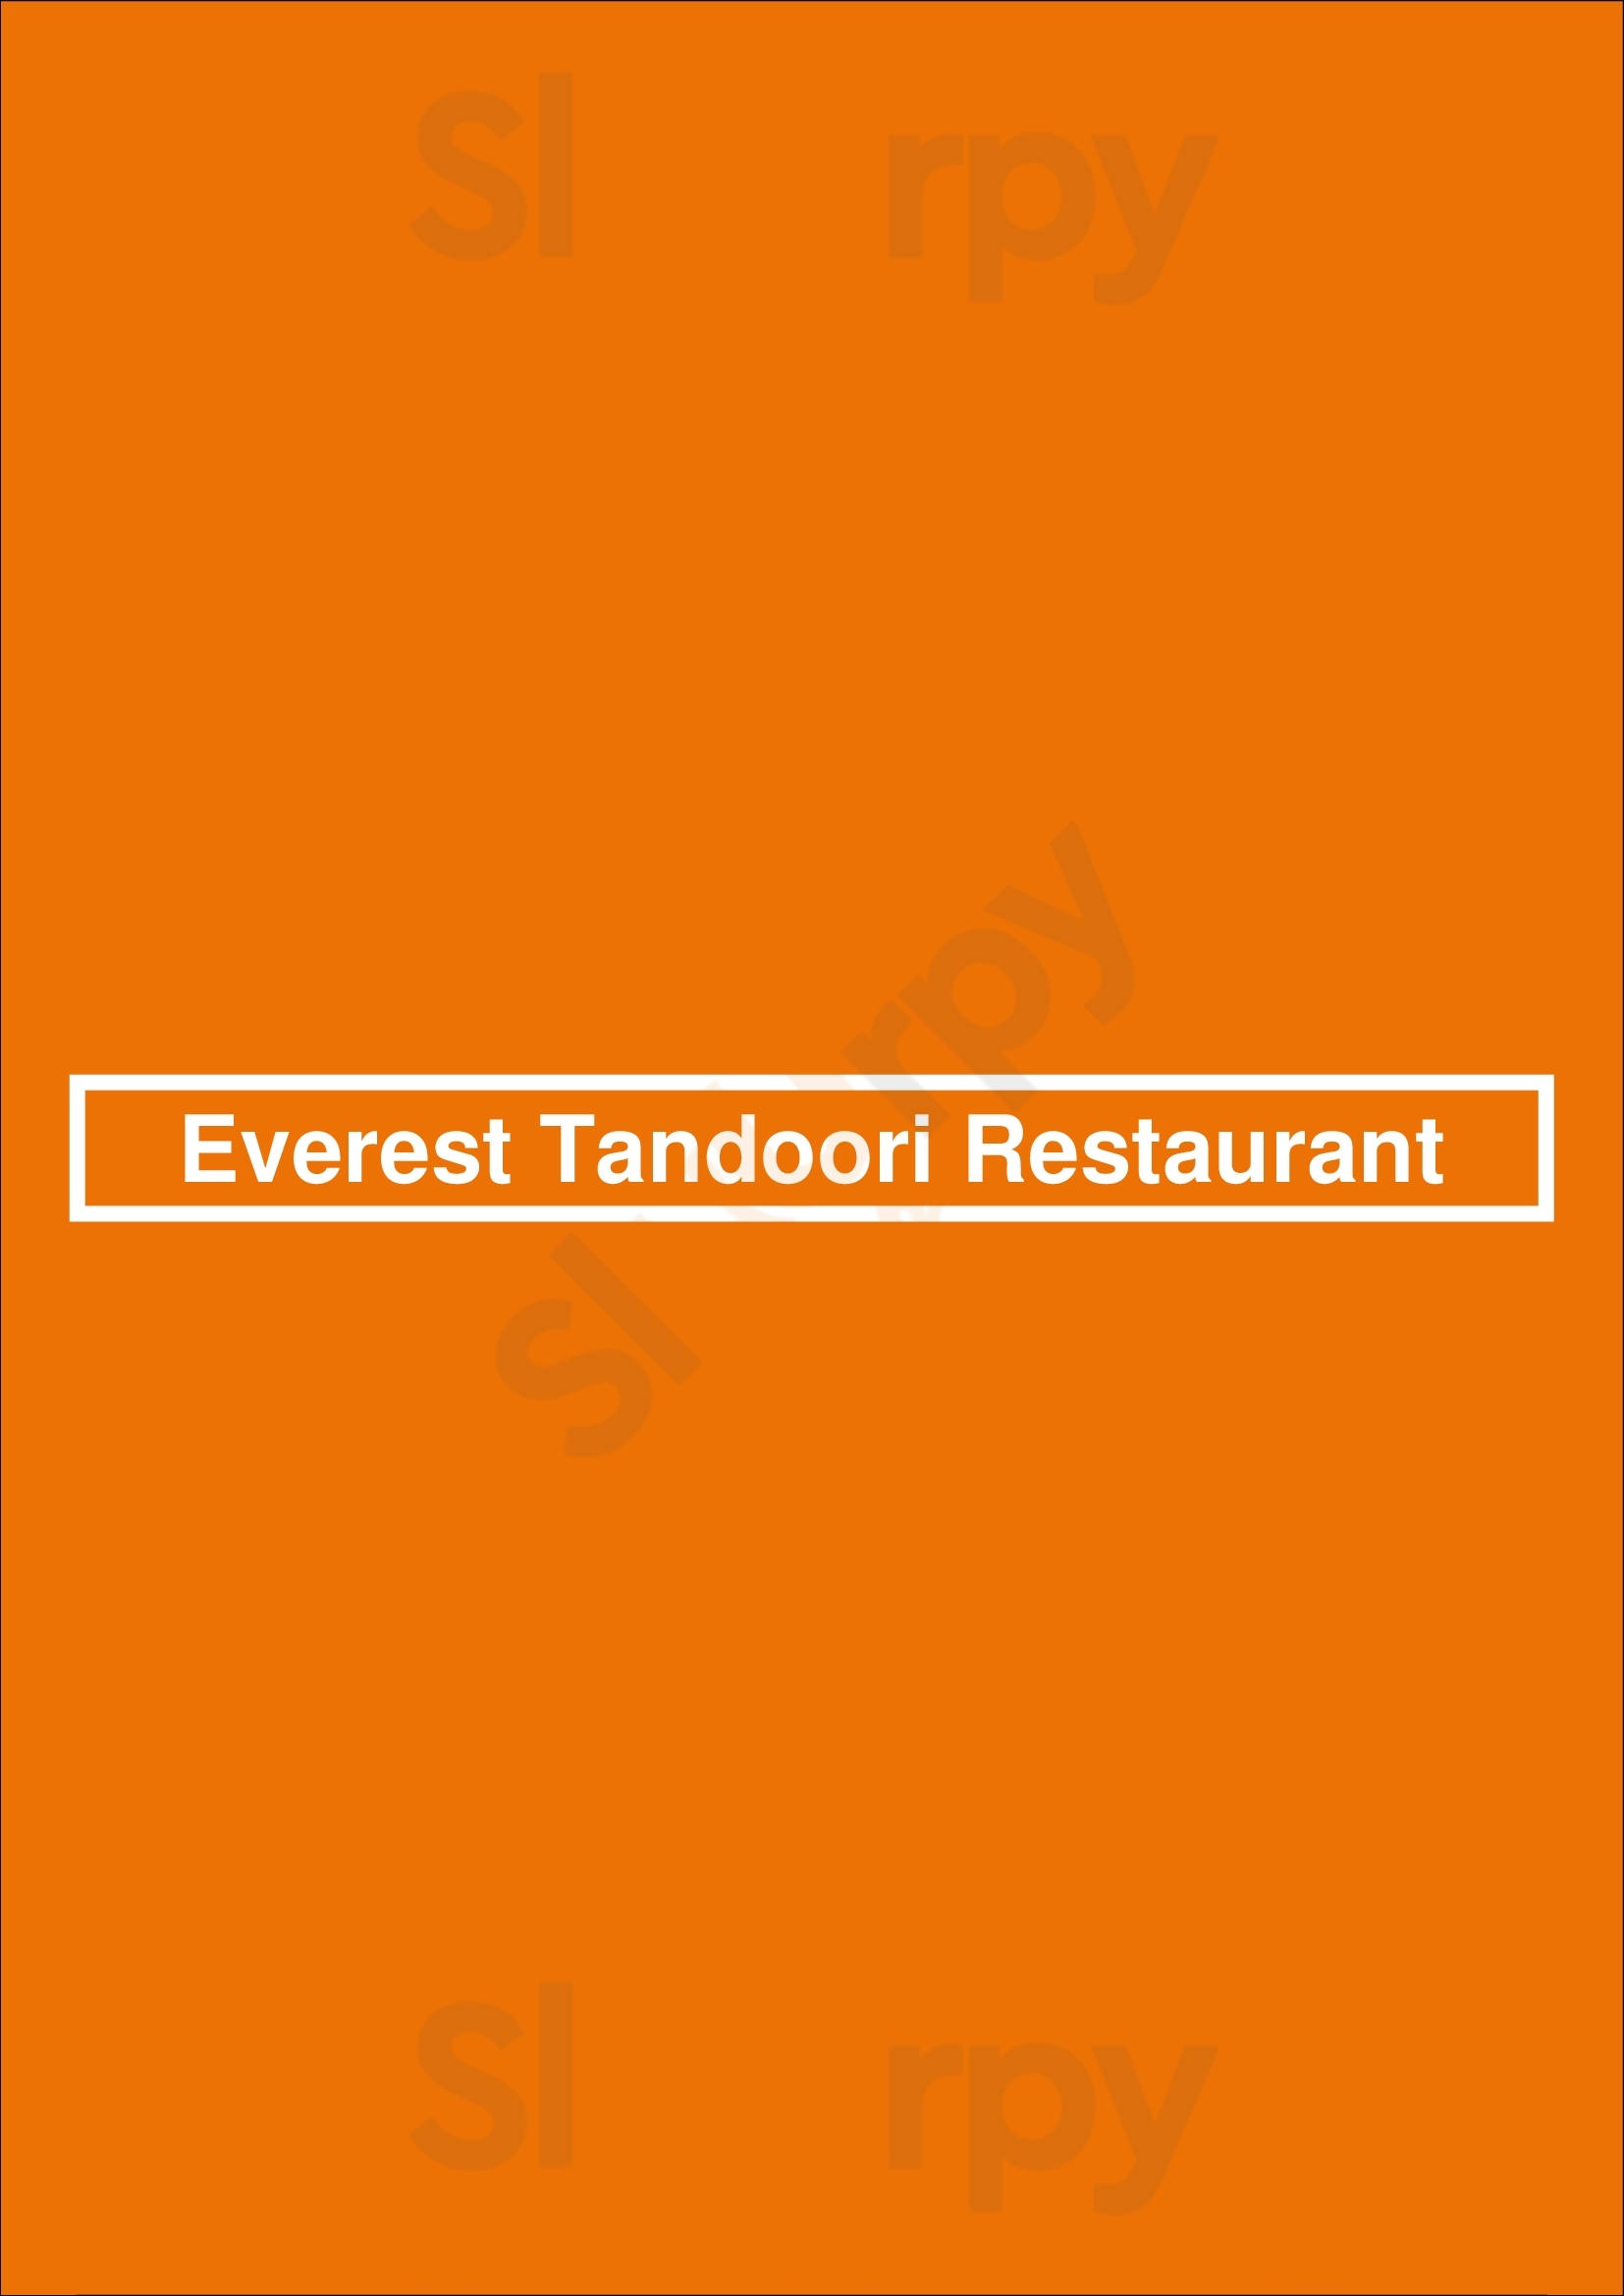 Everest Tandoori Restaurant Leiden Menu - 1